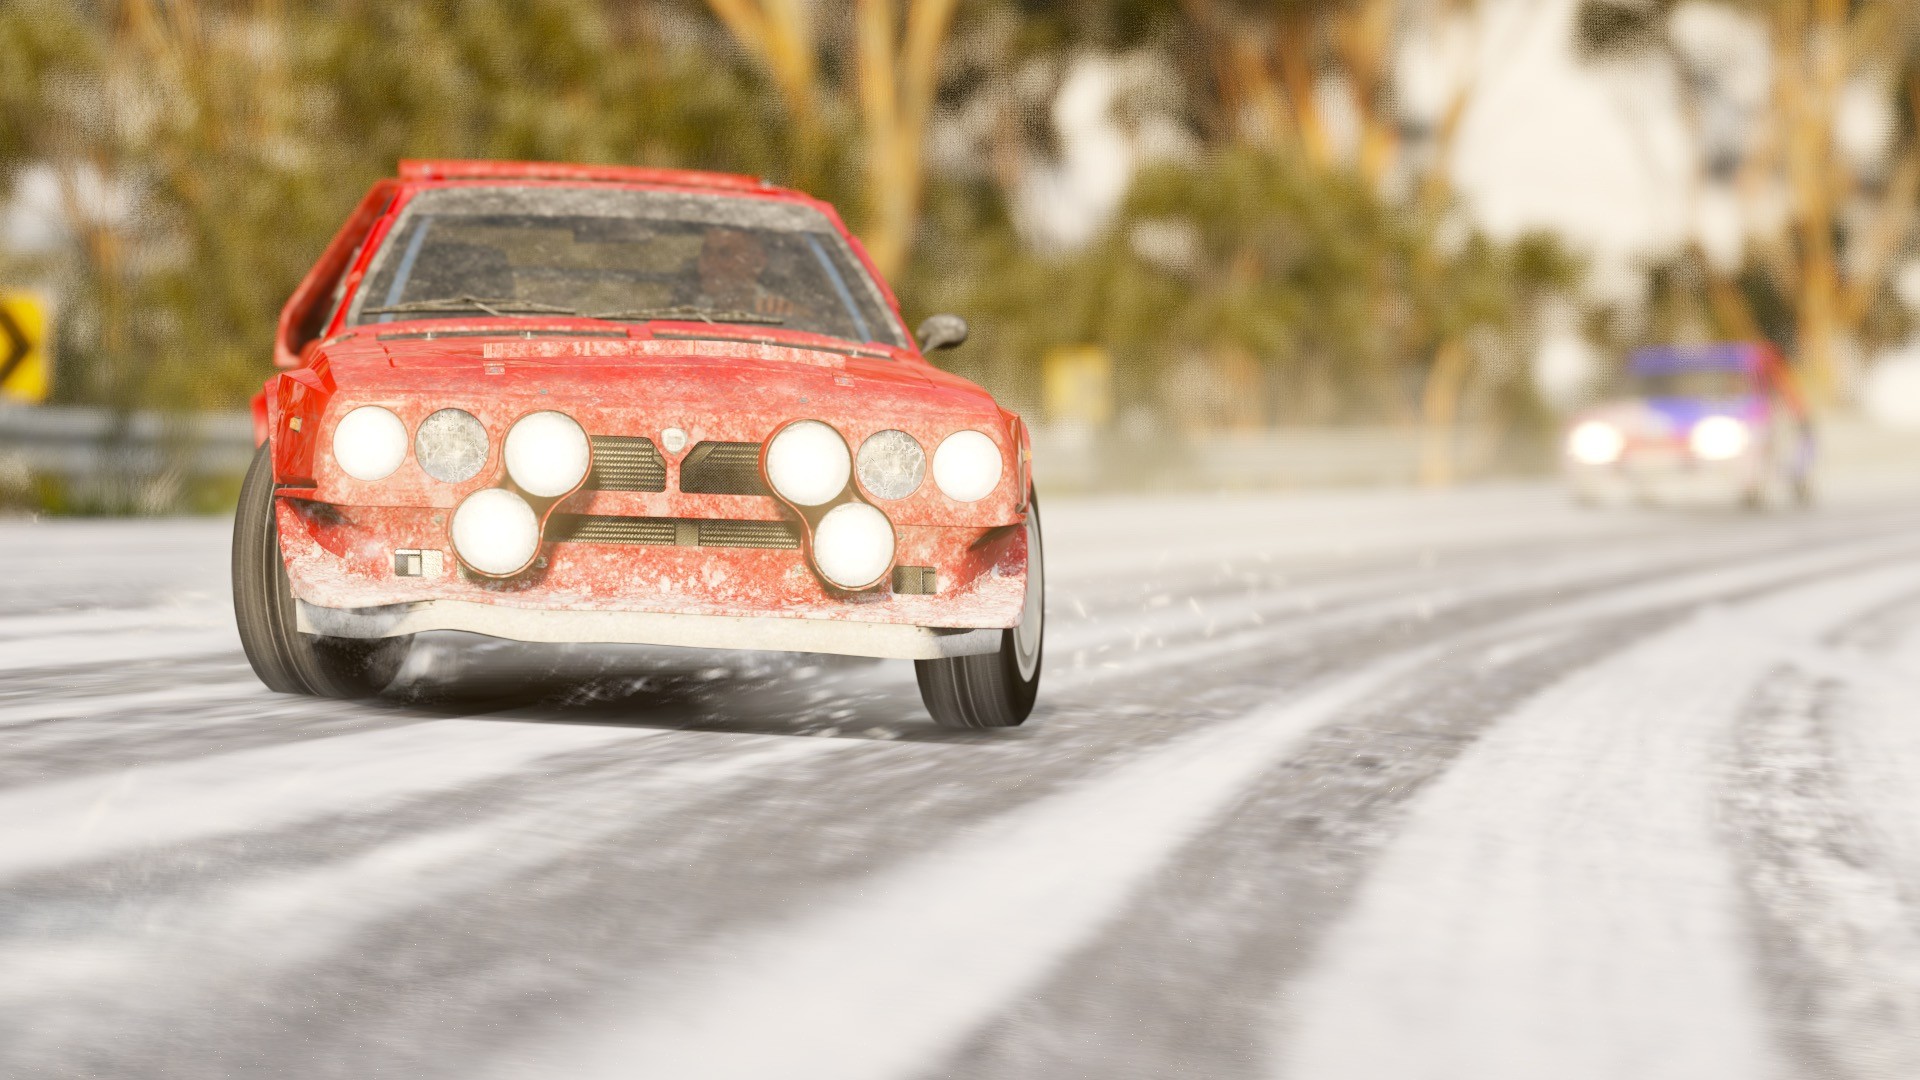 Wallpaper Lancia delta integrale car in forza horizon 3 video game